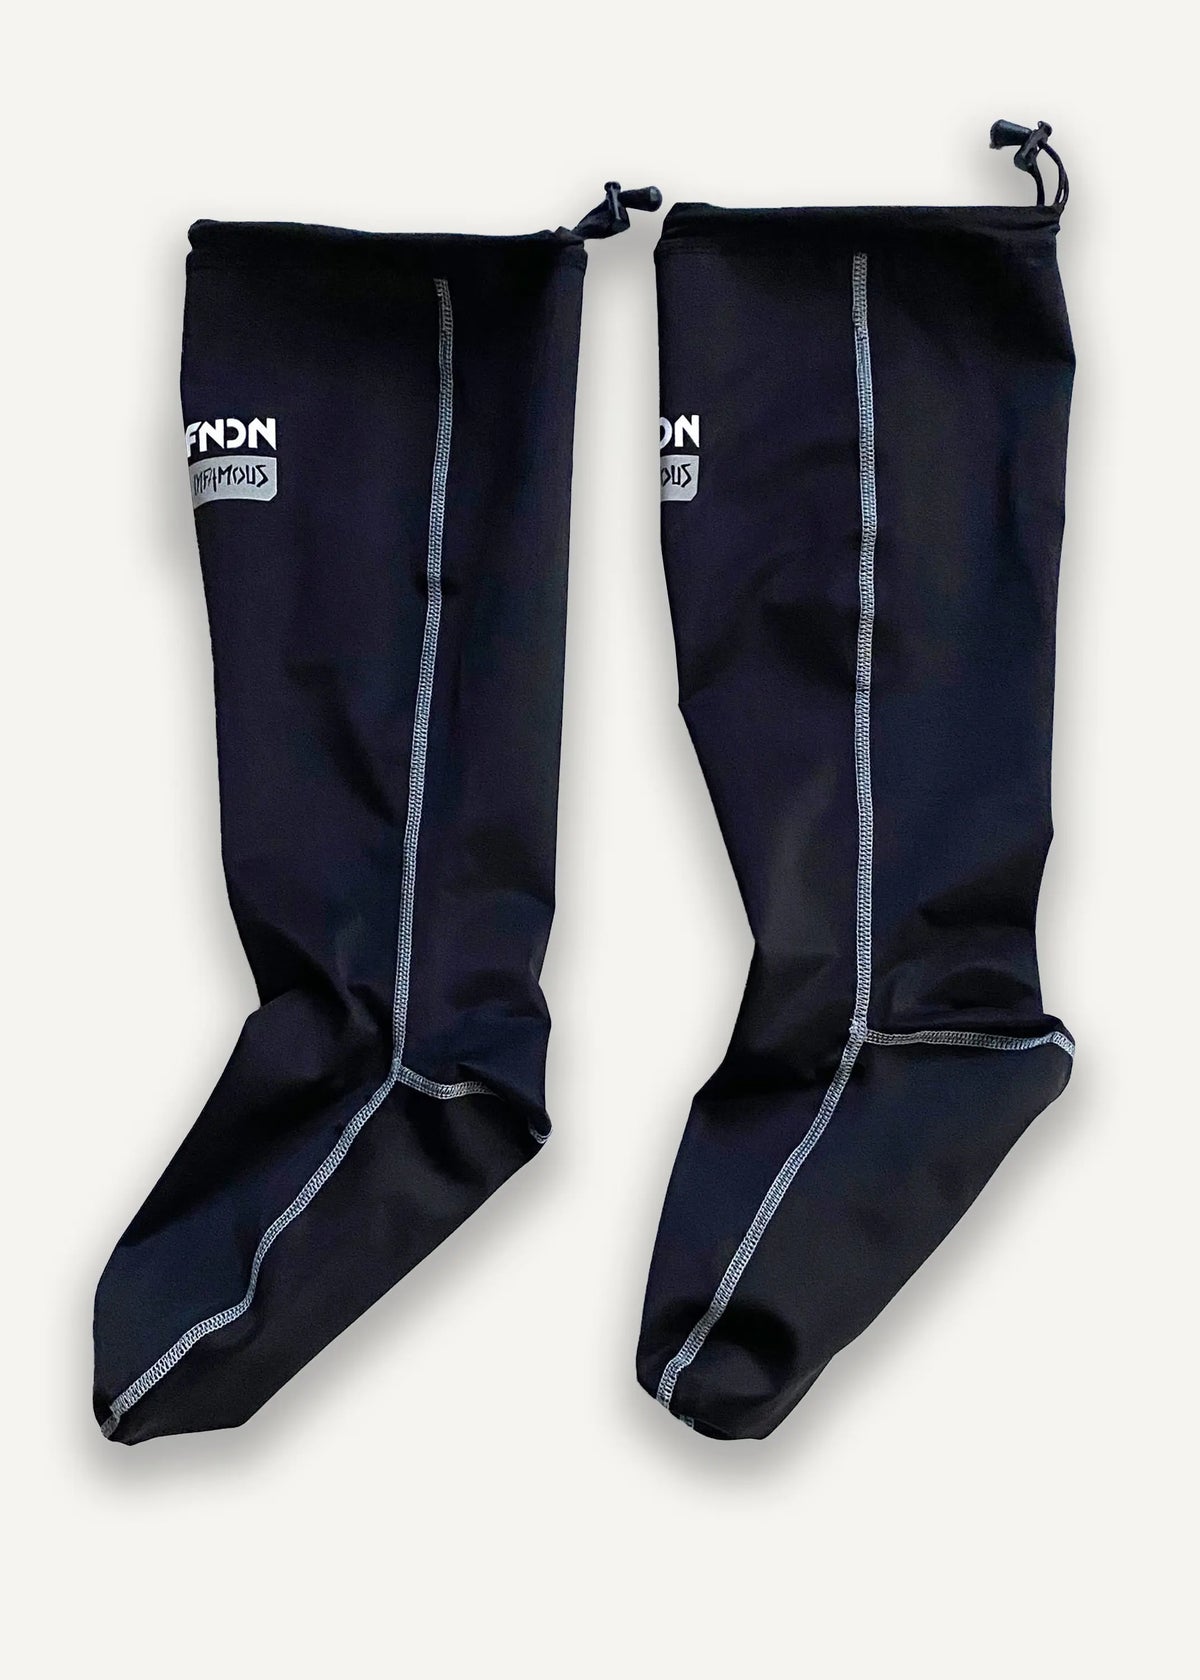 FNDN Infamous Waterproof Socks AKA “Portable Rain Boots” FNDN